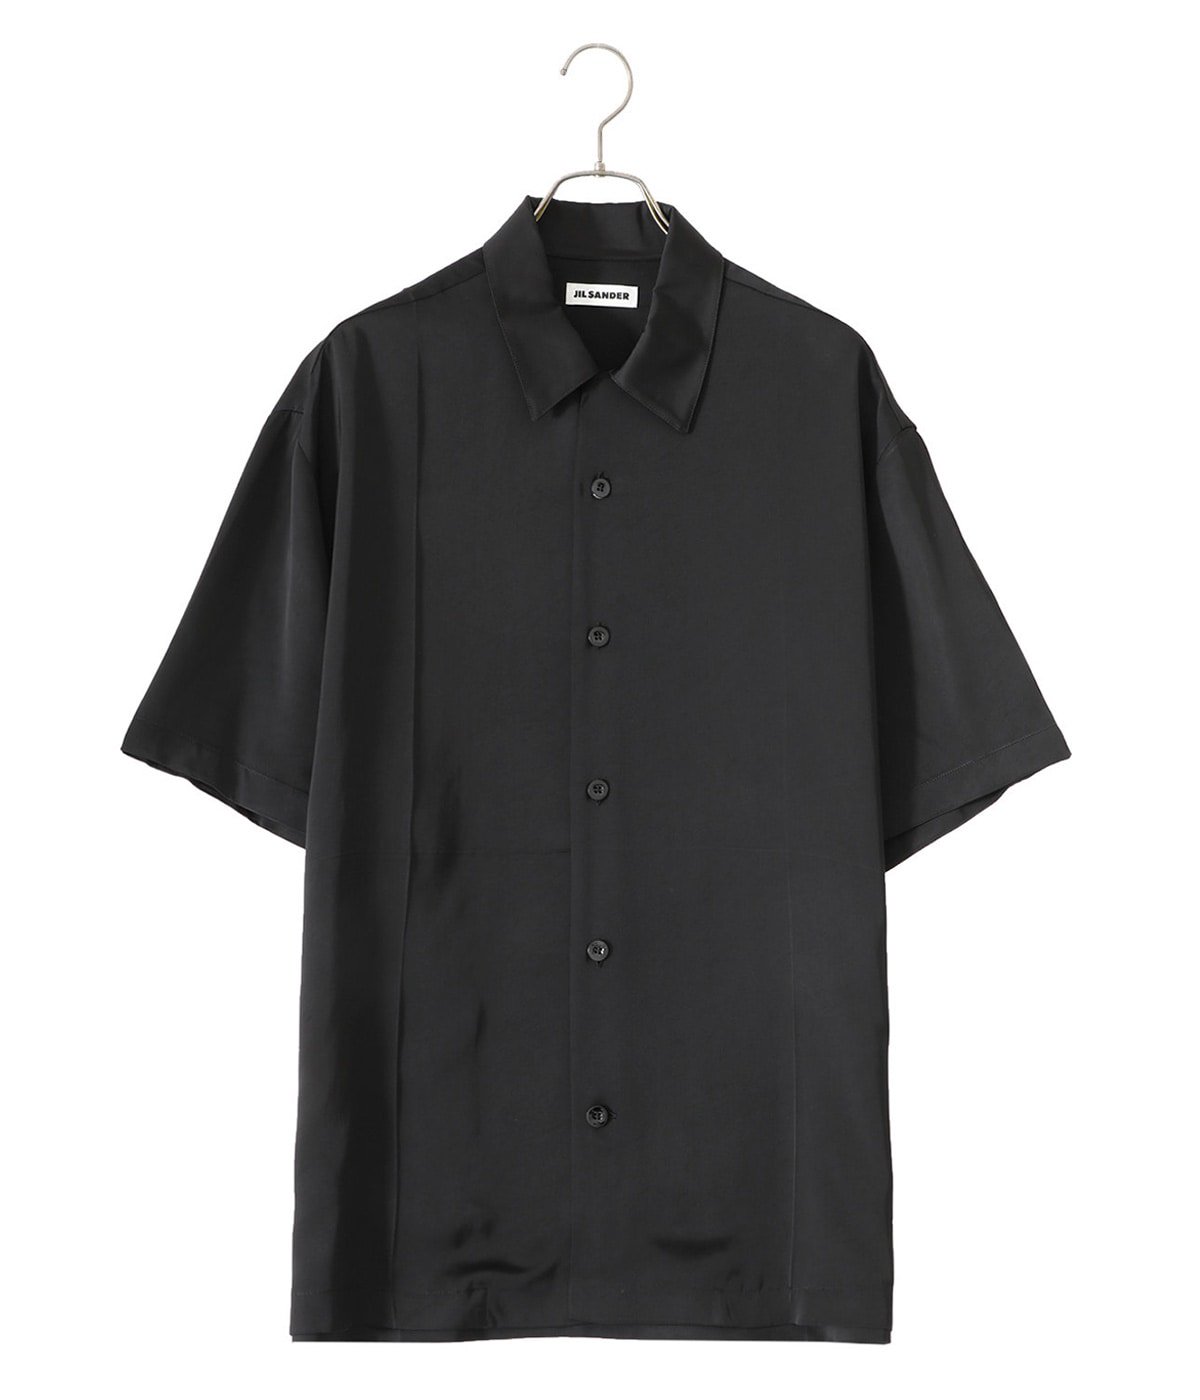 JIL SANDER�ｼ医ず繝ｫ繧ｵ繝ｳ繝�繝ｼ�ｼ碓pen collar shirt (black)